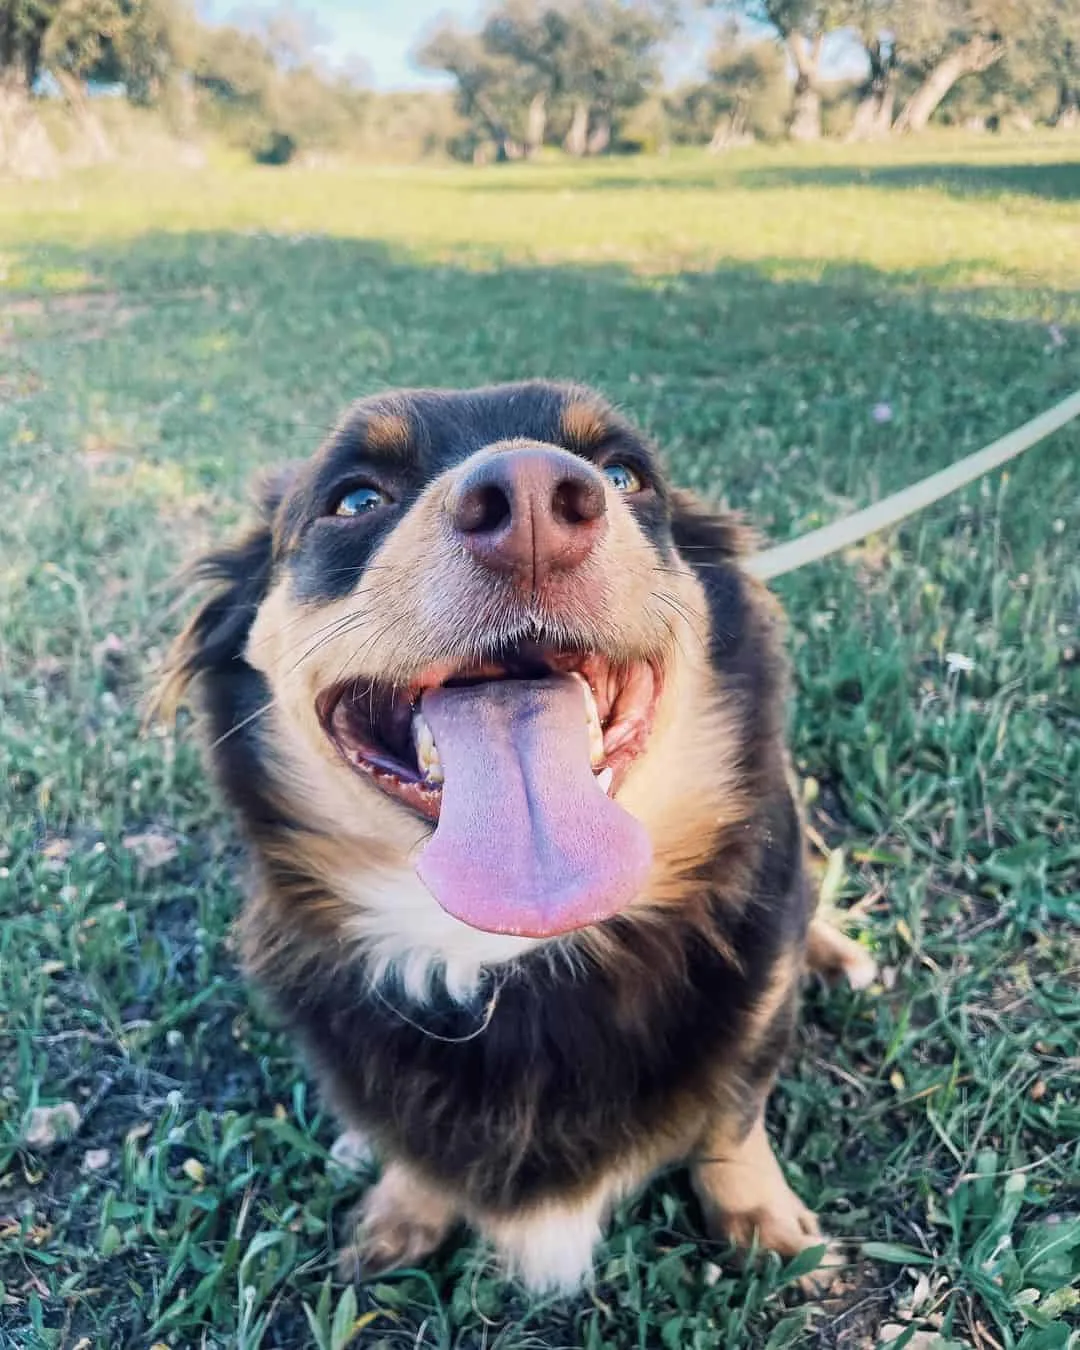 photo of a happy dog who enjoys freedom